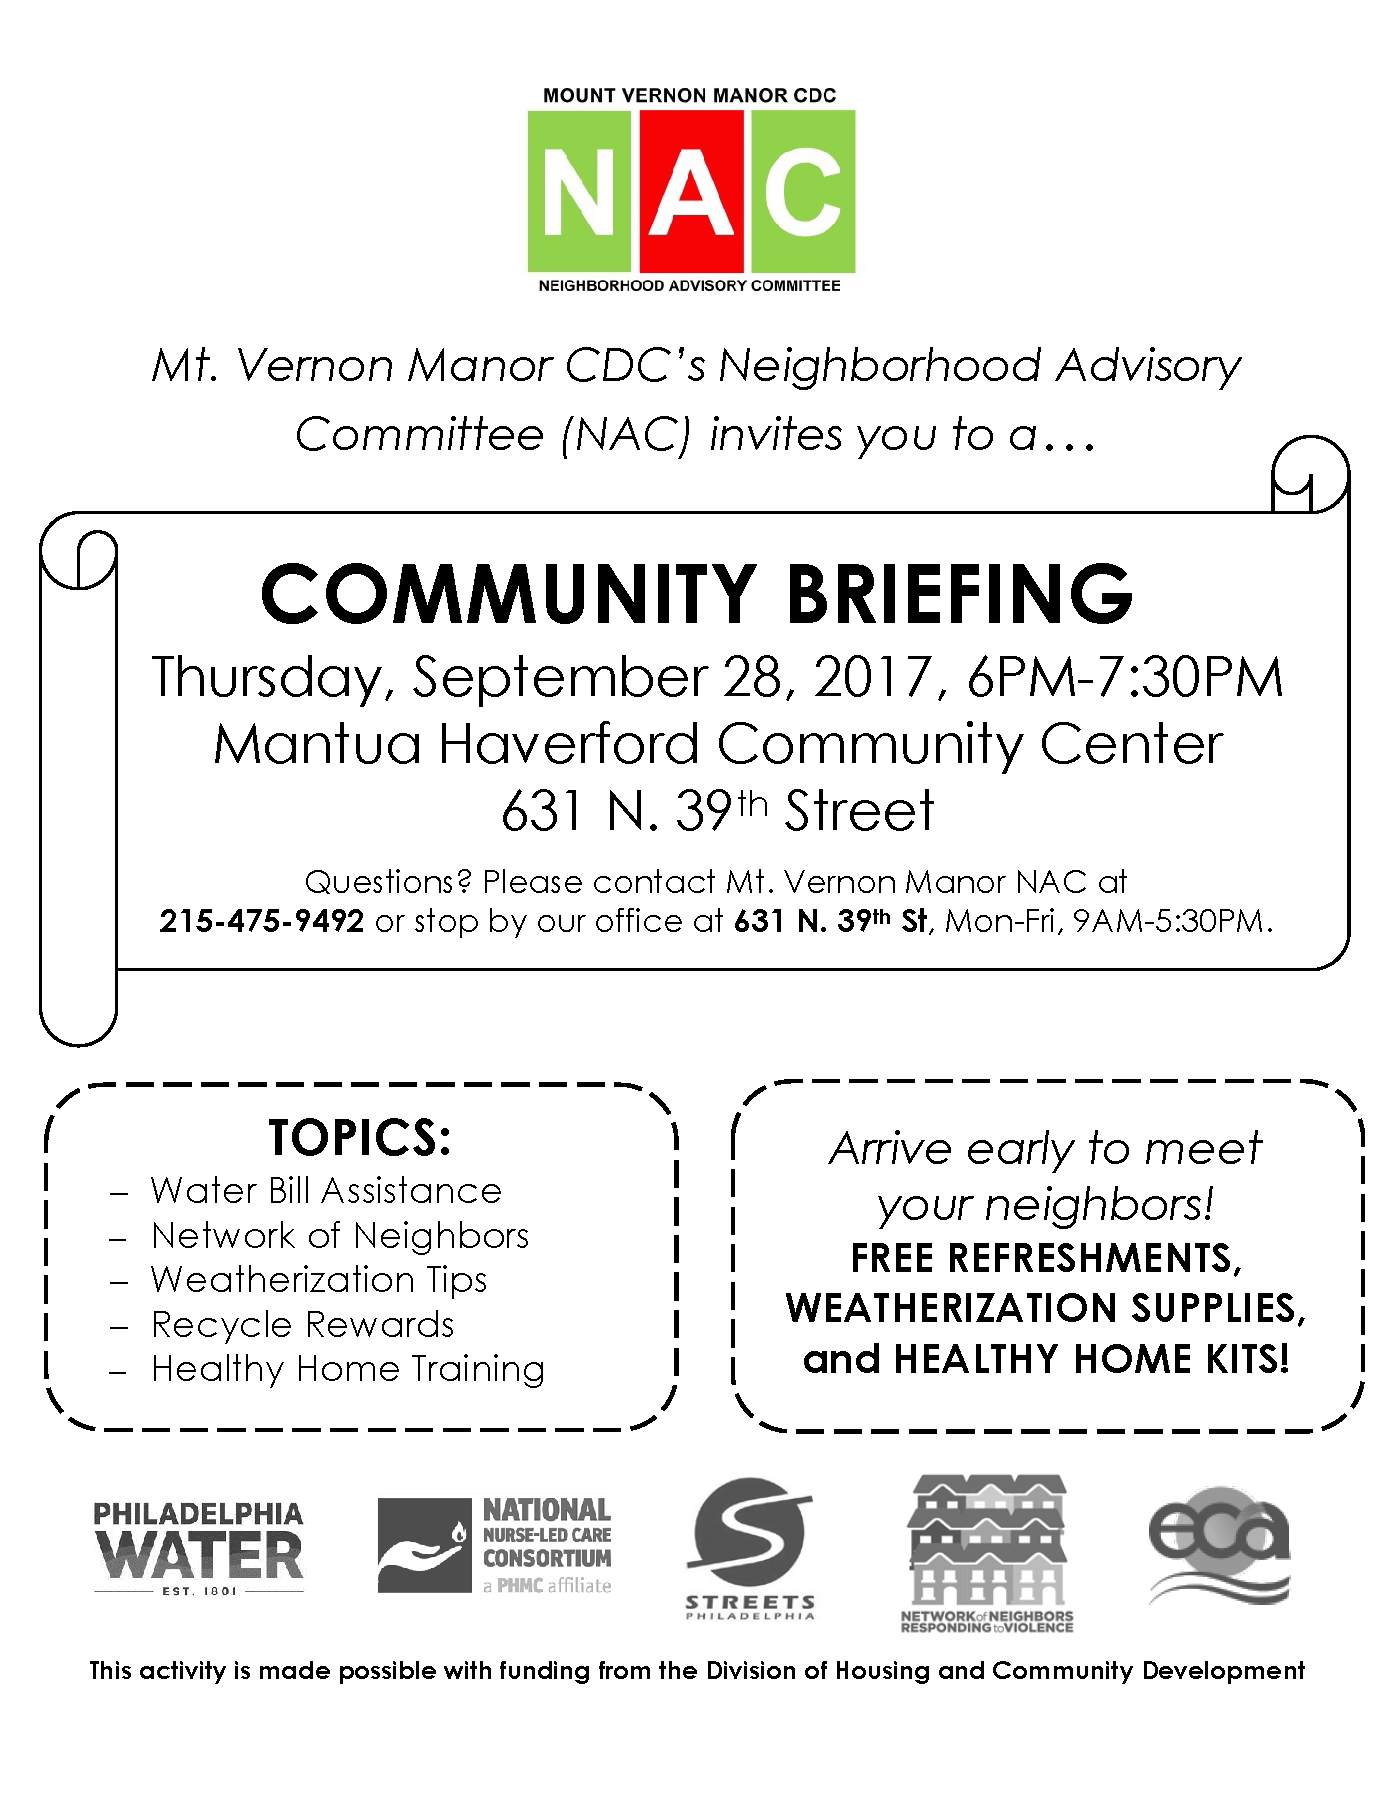 September 28 Community Briefing Flyer